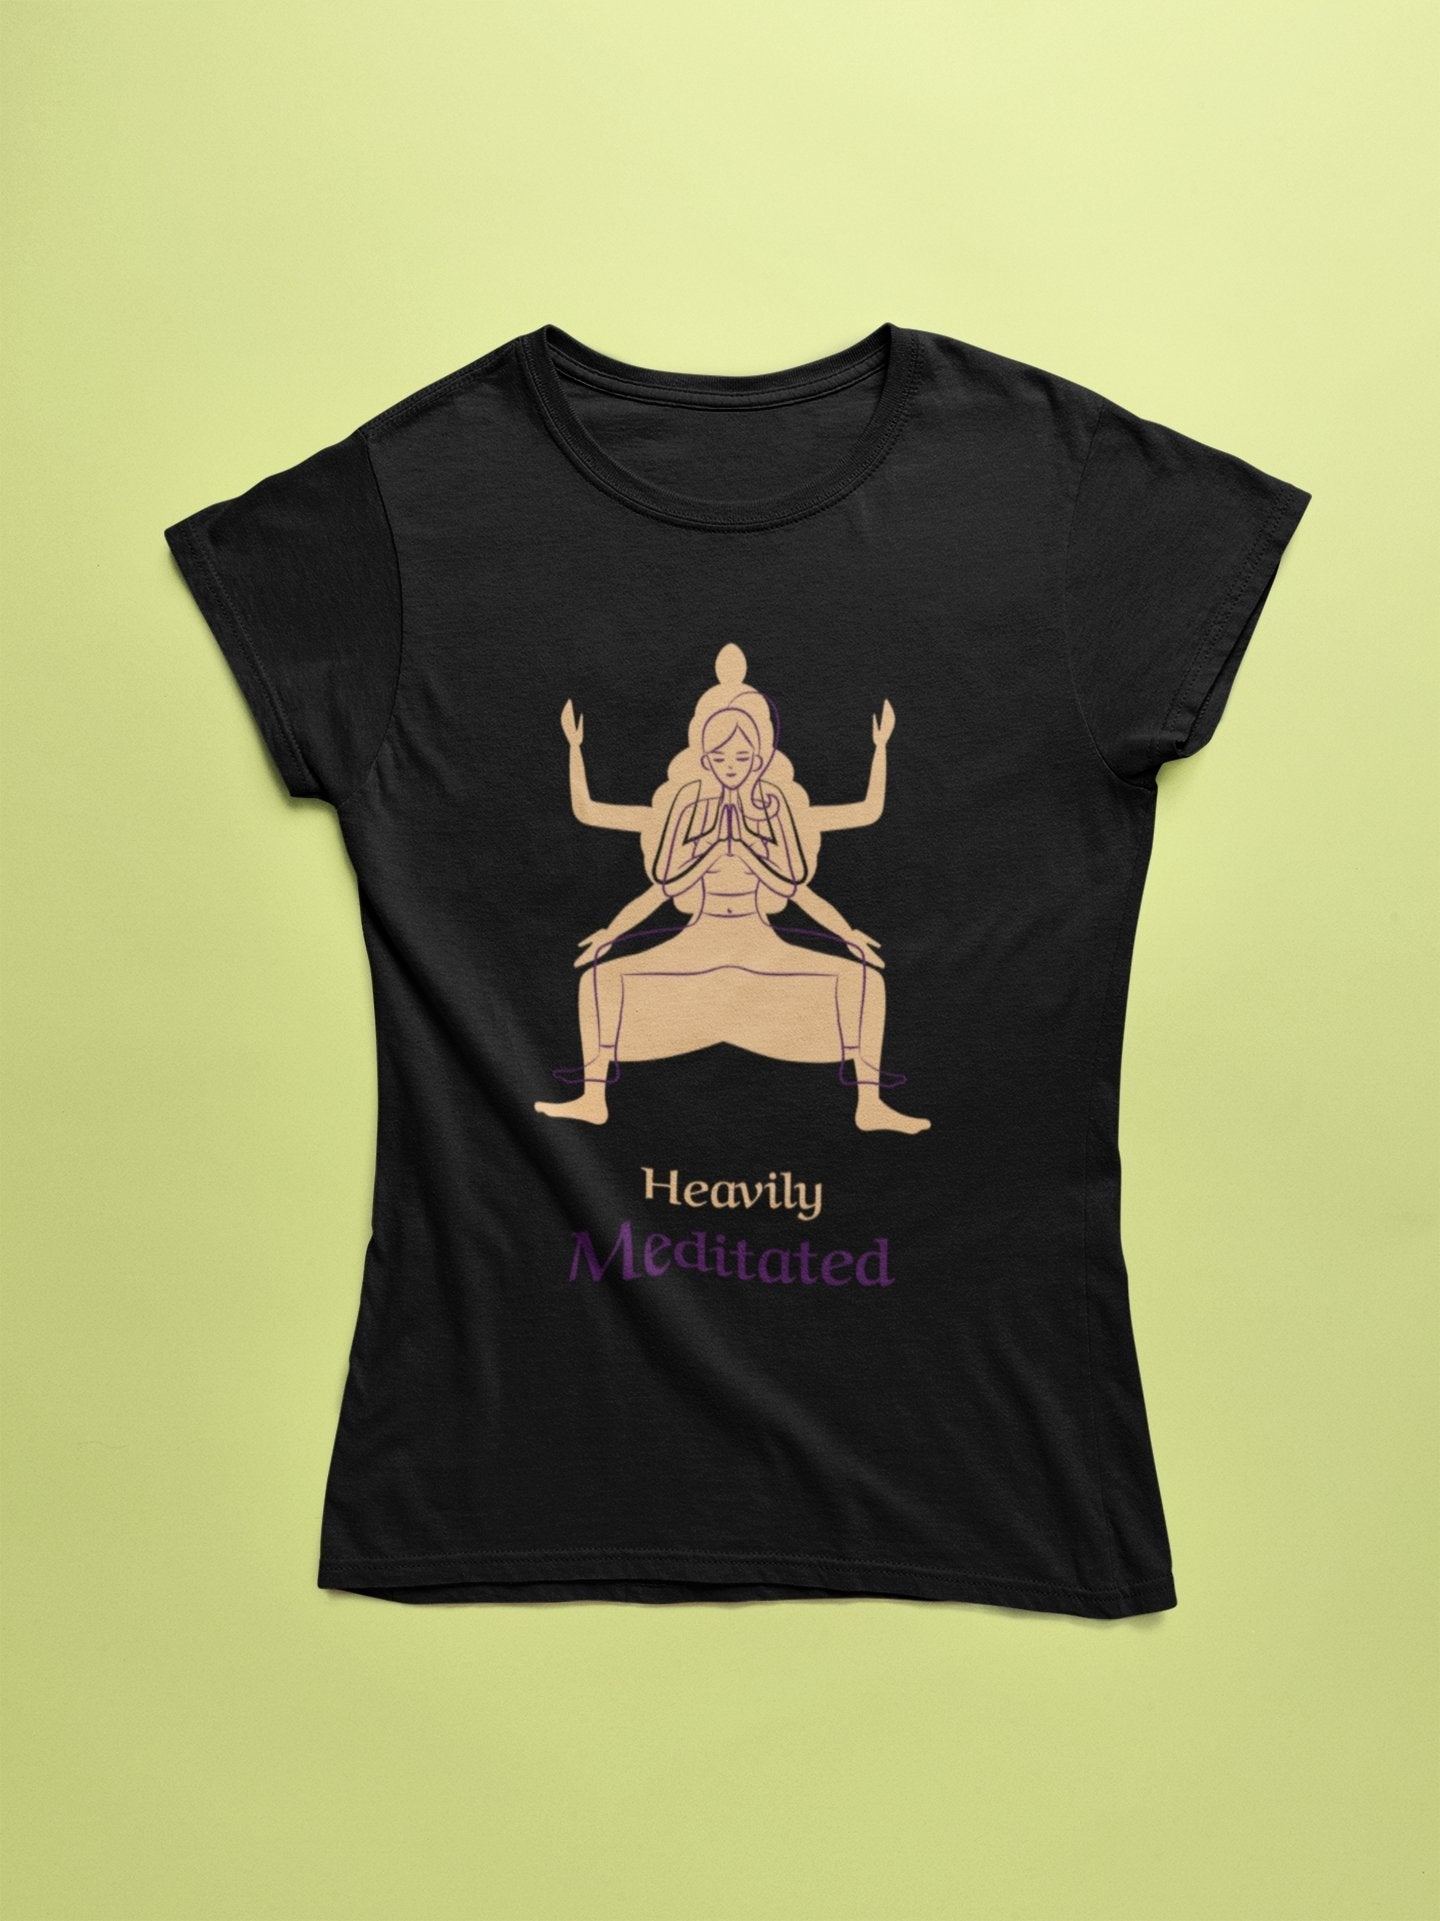 thelegalgang,Heavily Meditated Yoga T shirt for Women,WOMEN.